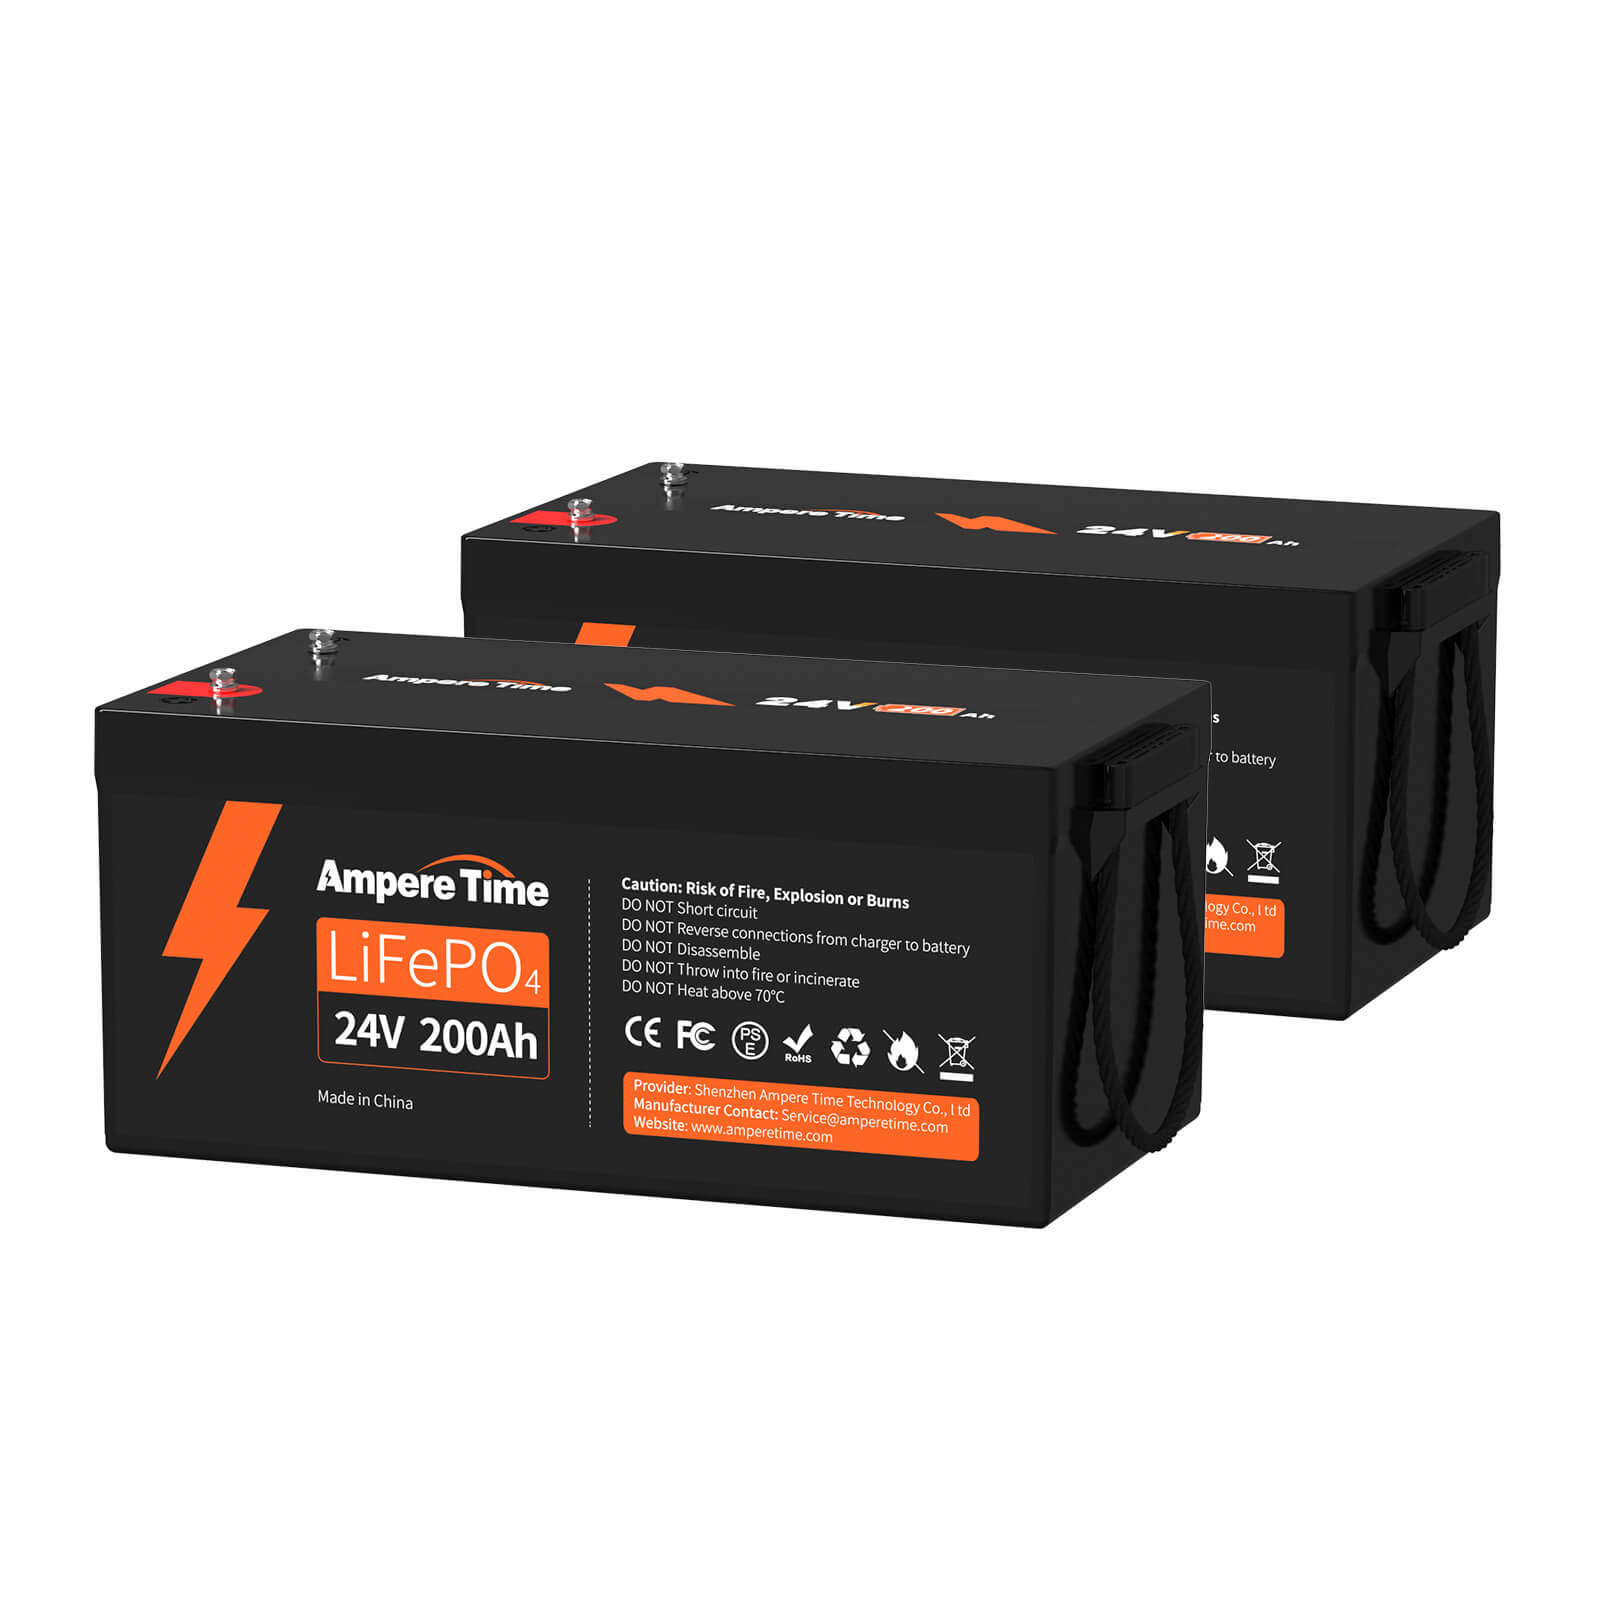 Ampere Time 24V 200Ah 5.12kWh Tife Zyklen LiFePO4 Batterie mit längerer Laufzeit, integriertem 200A BMS Amperetime DE